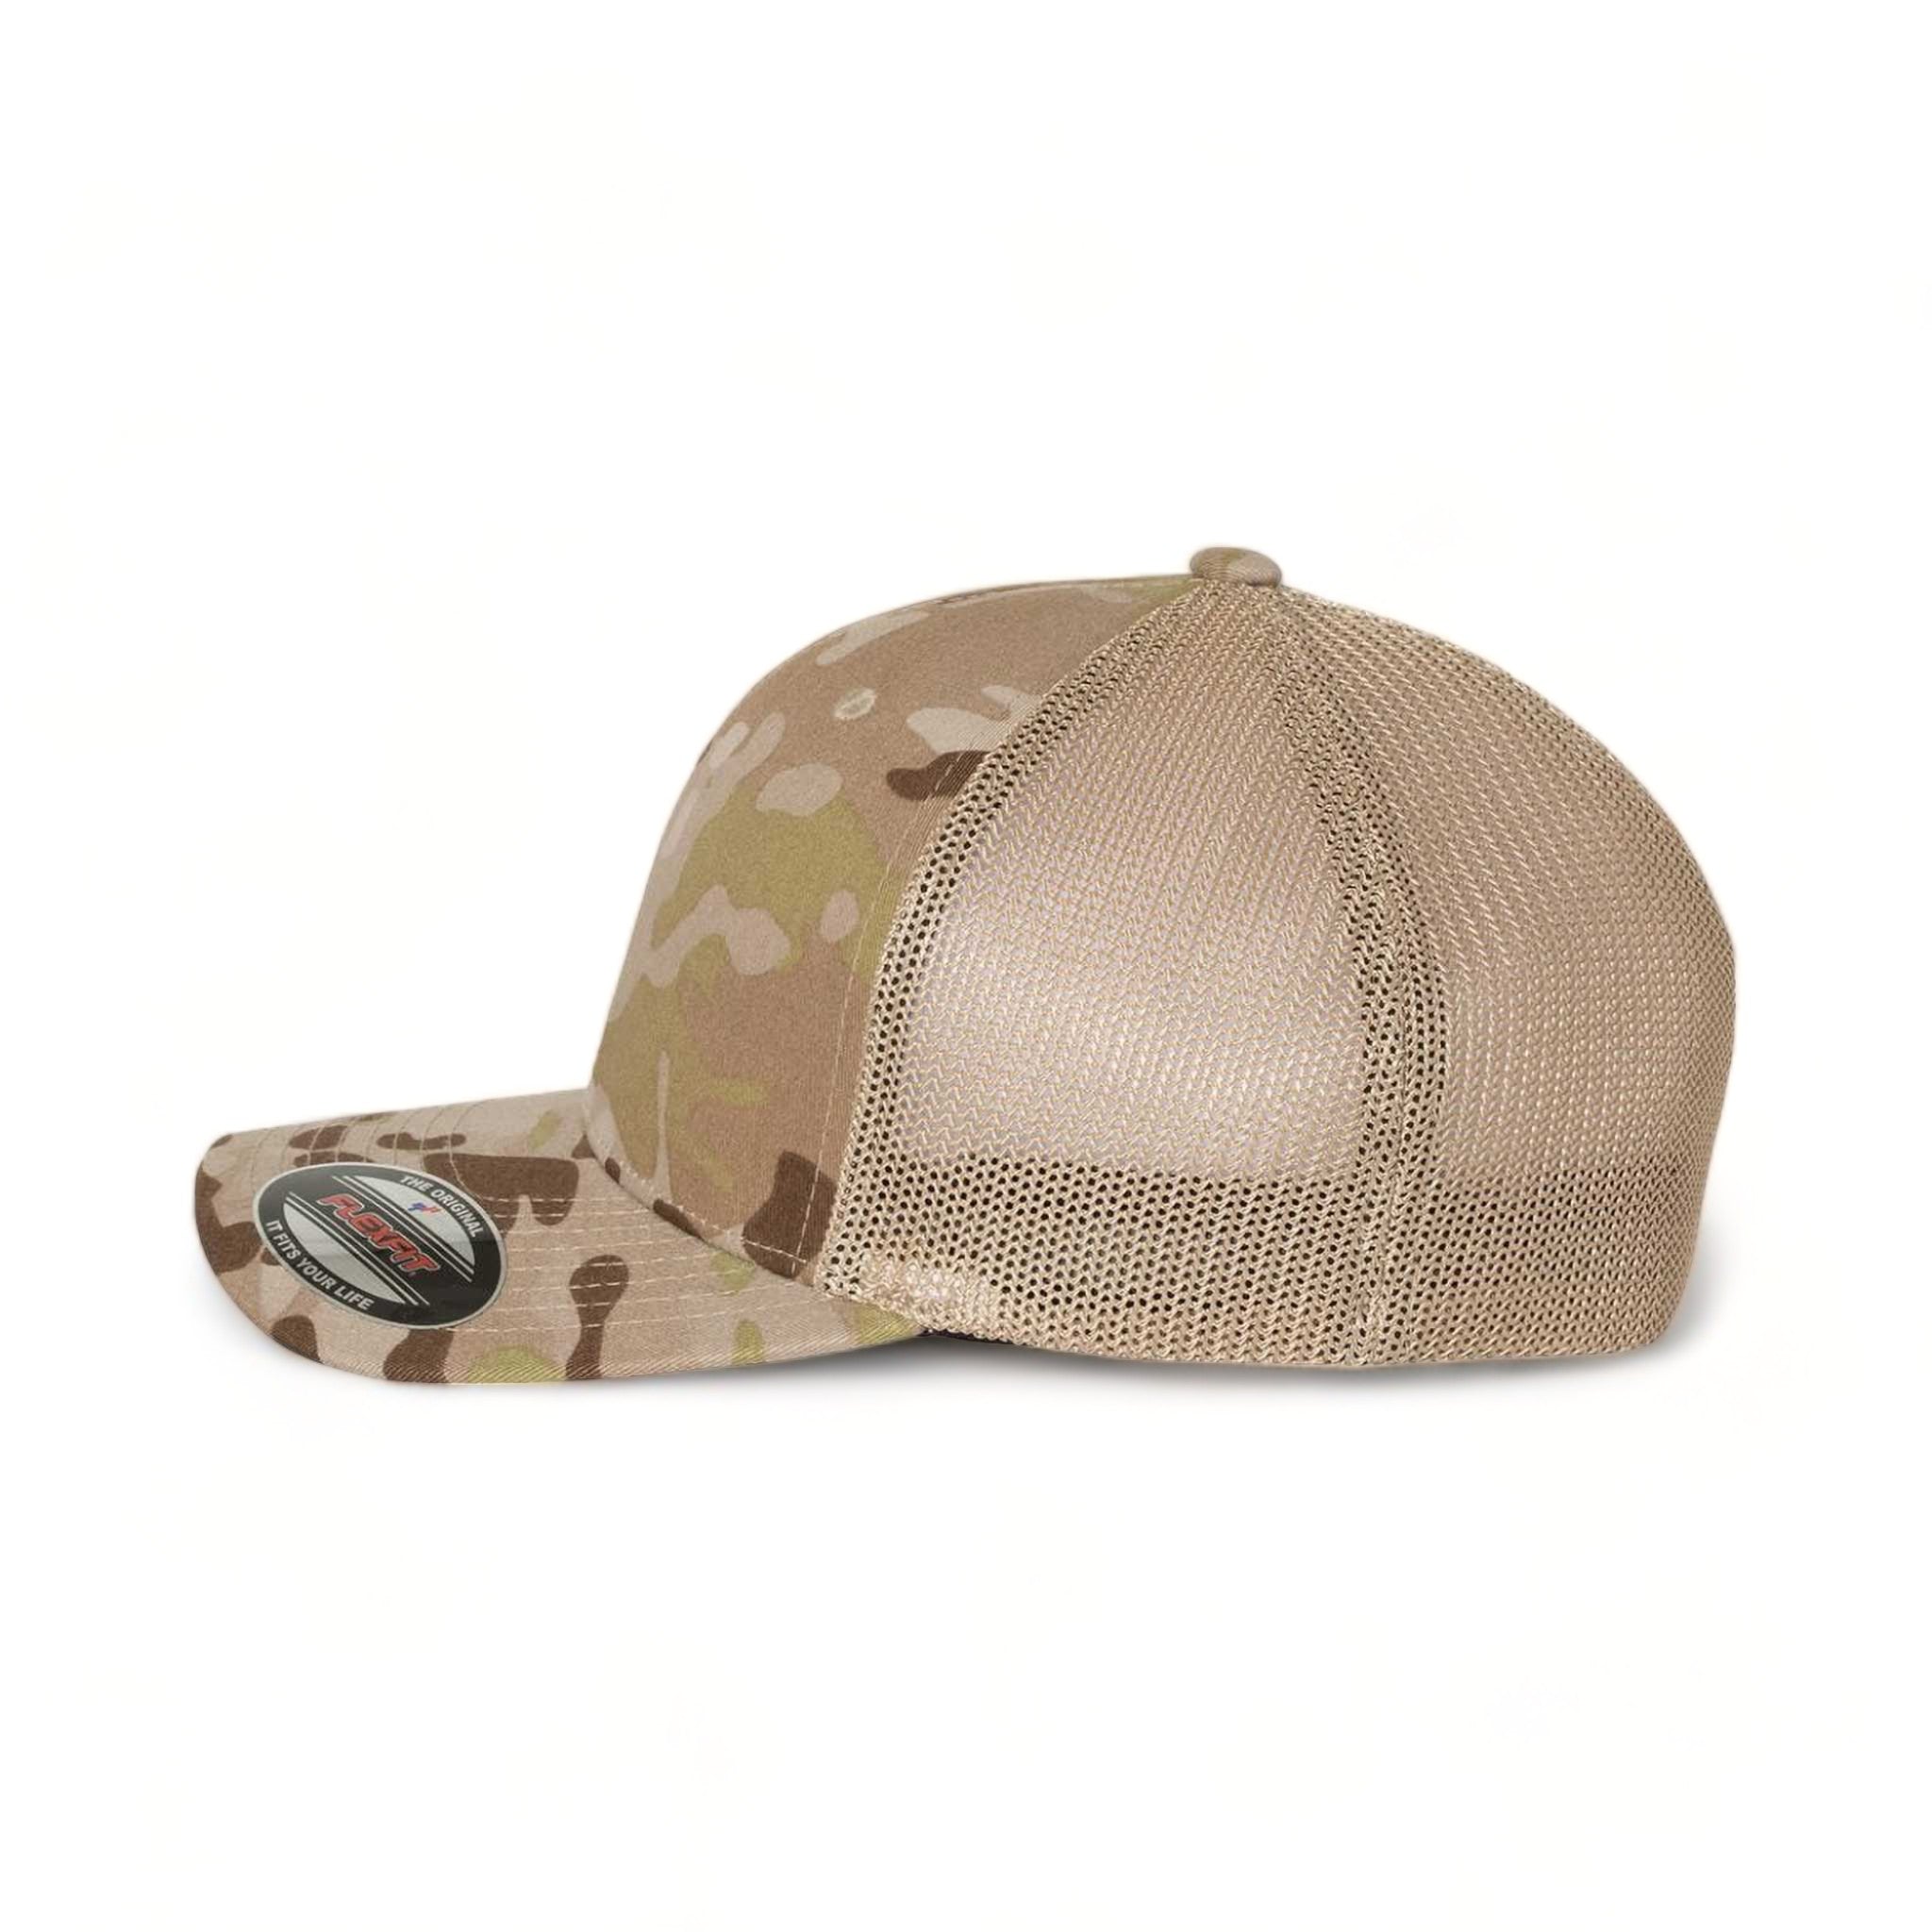 Side view of Flexfit 6511 custom hat in multicam arid and tan